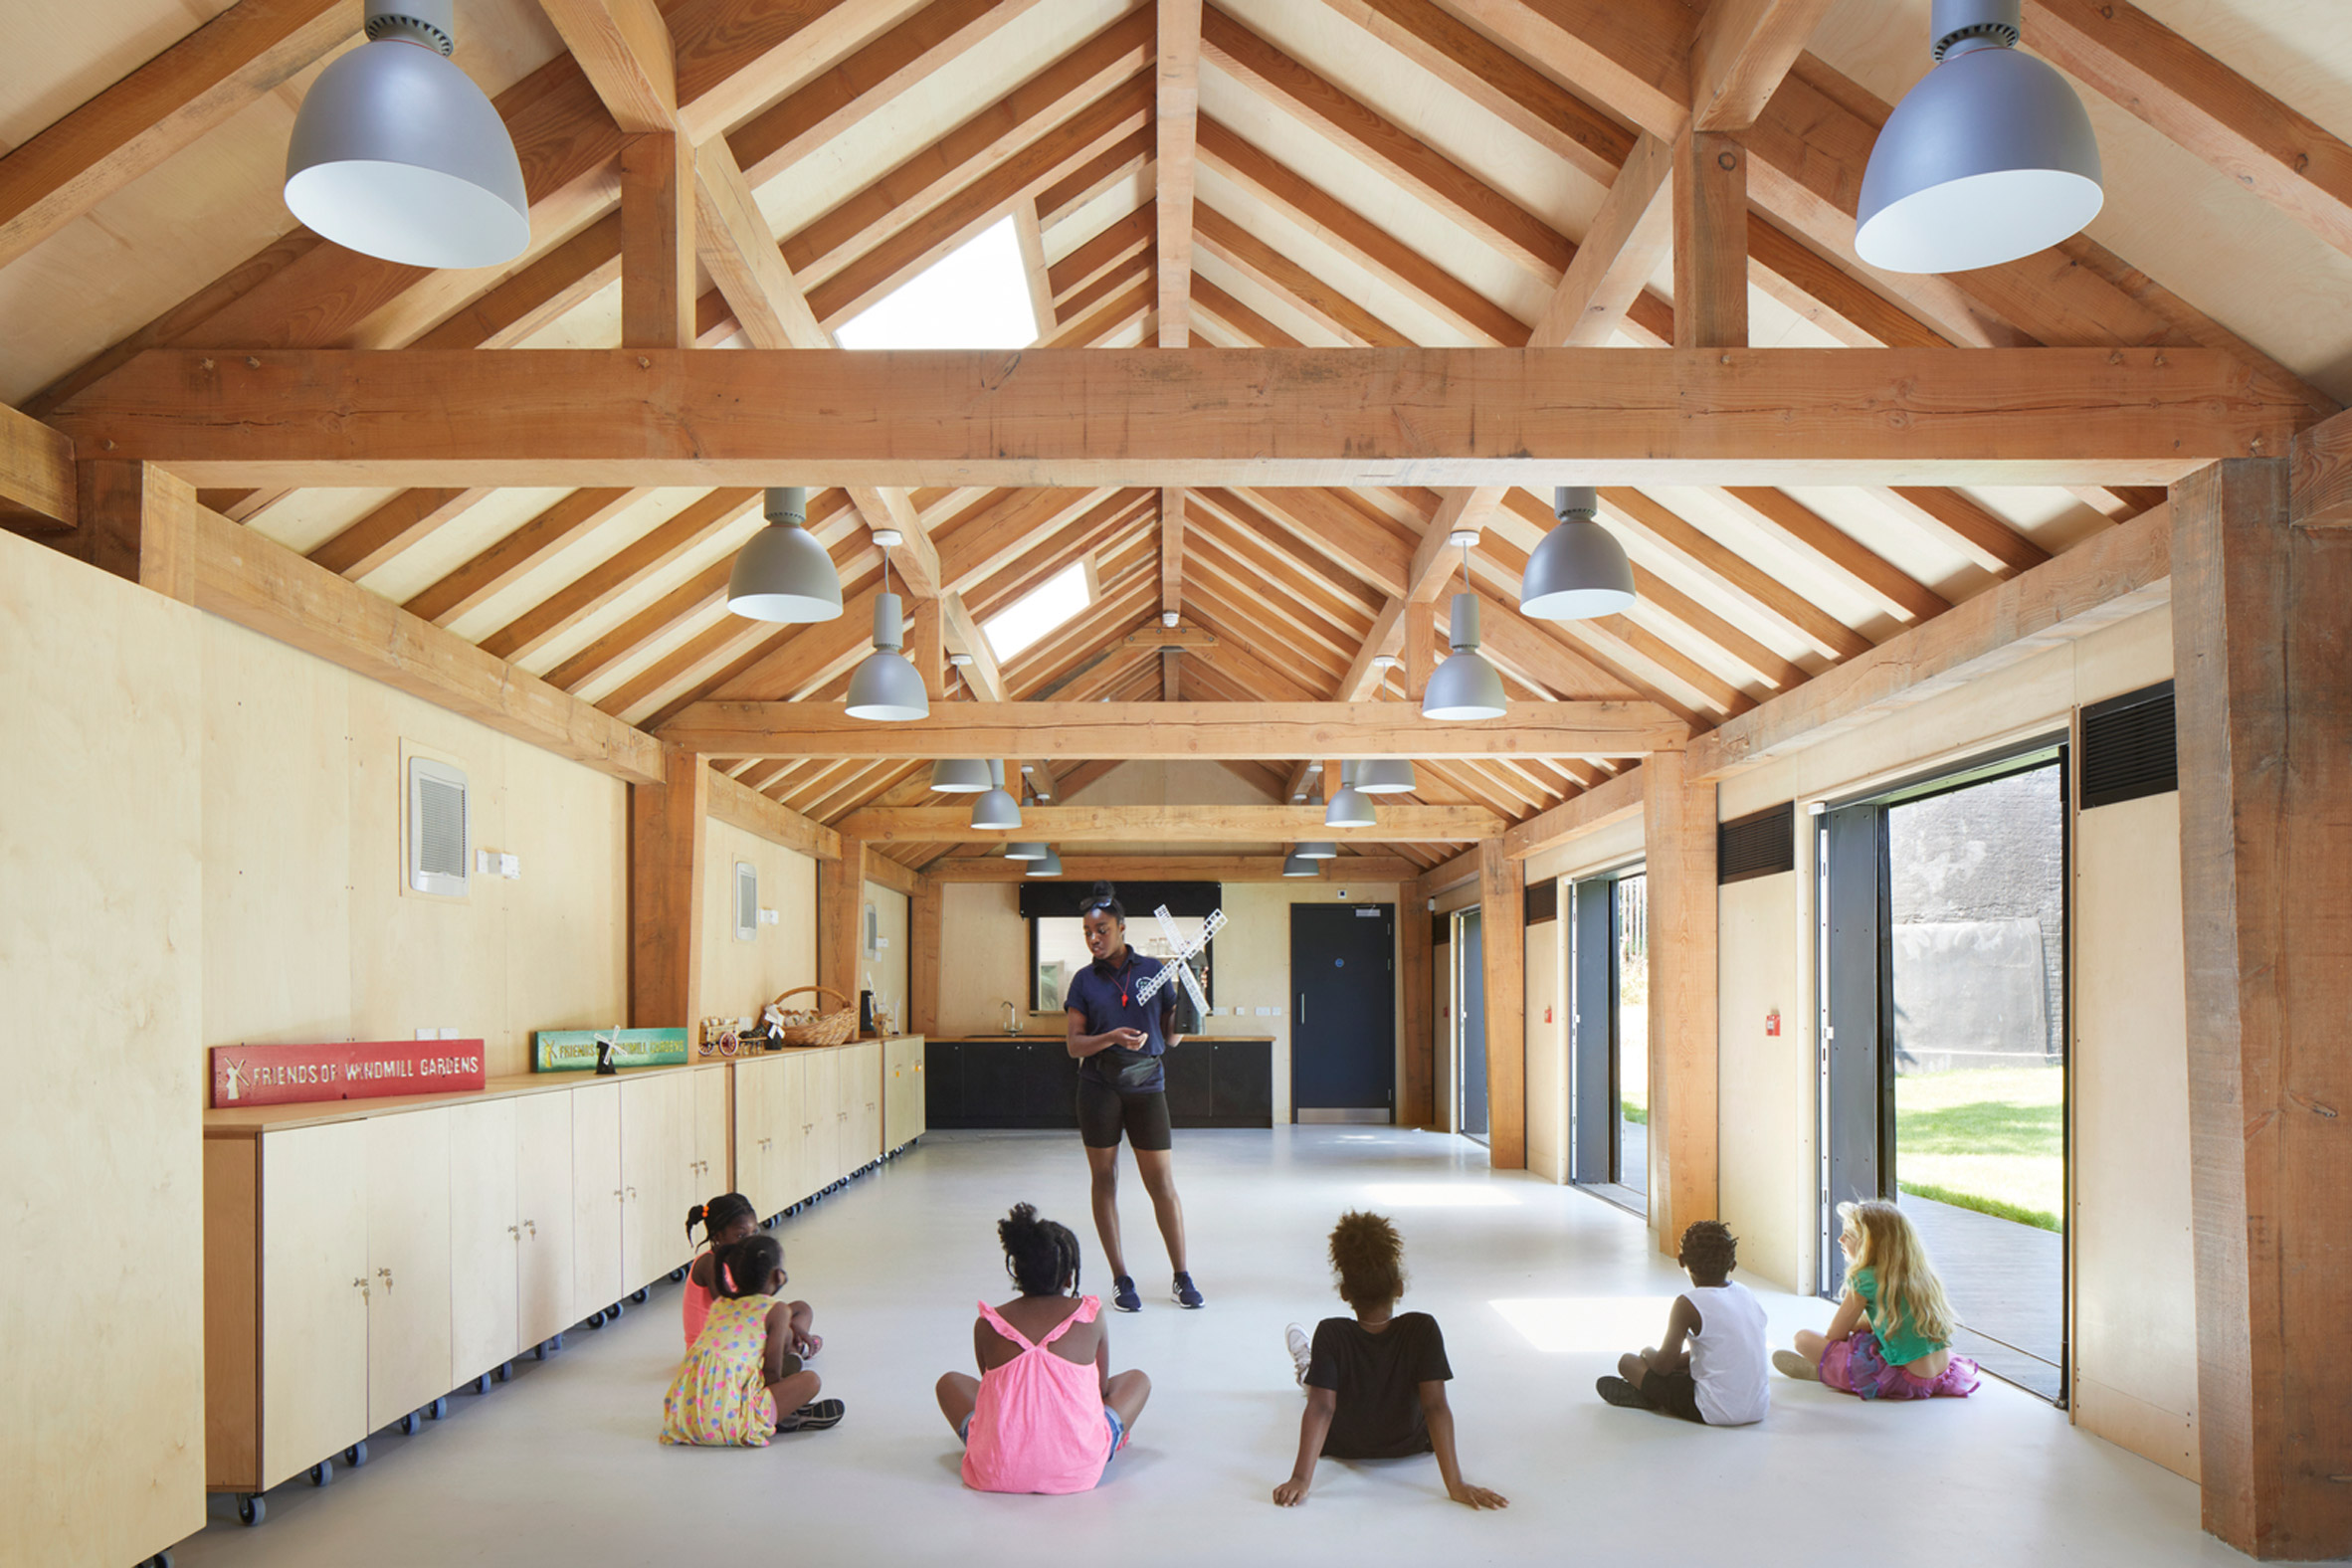 Timber framed community centre